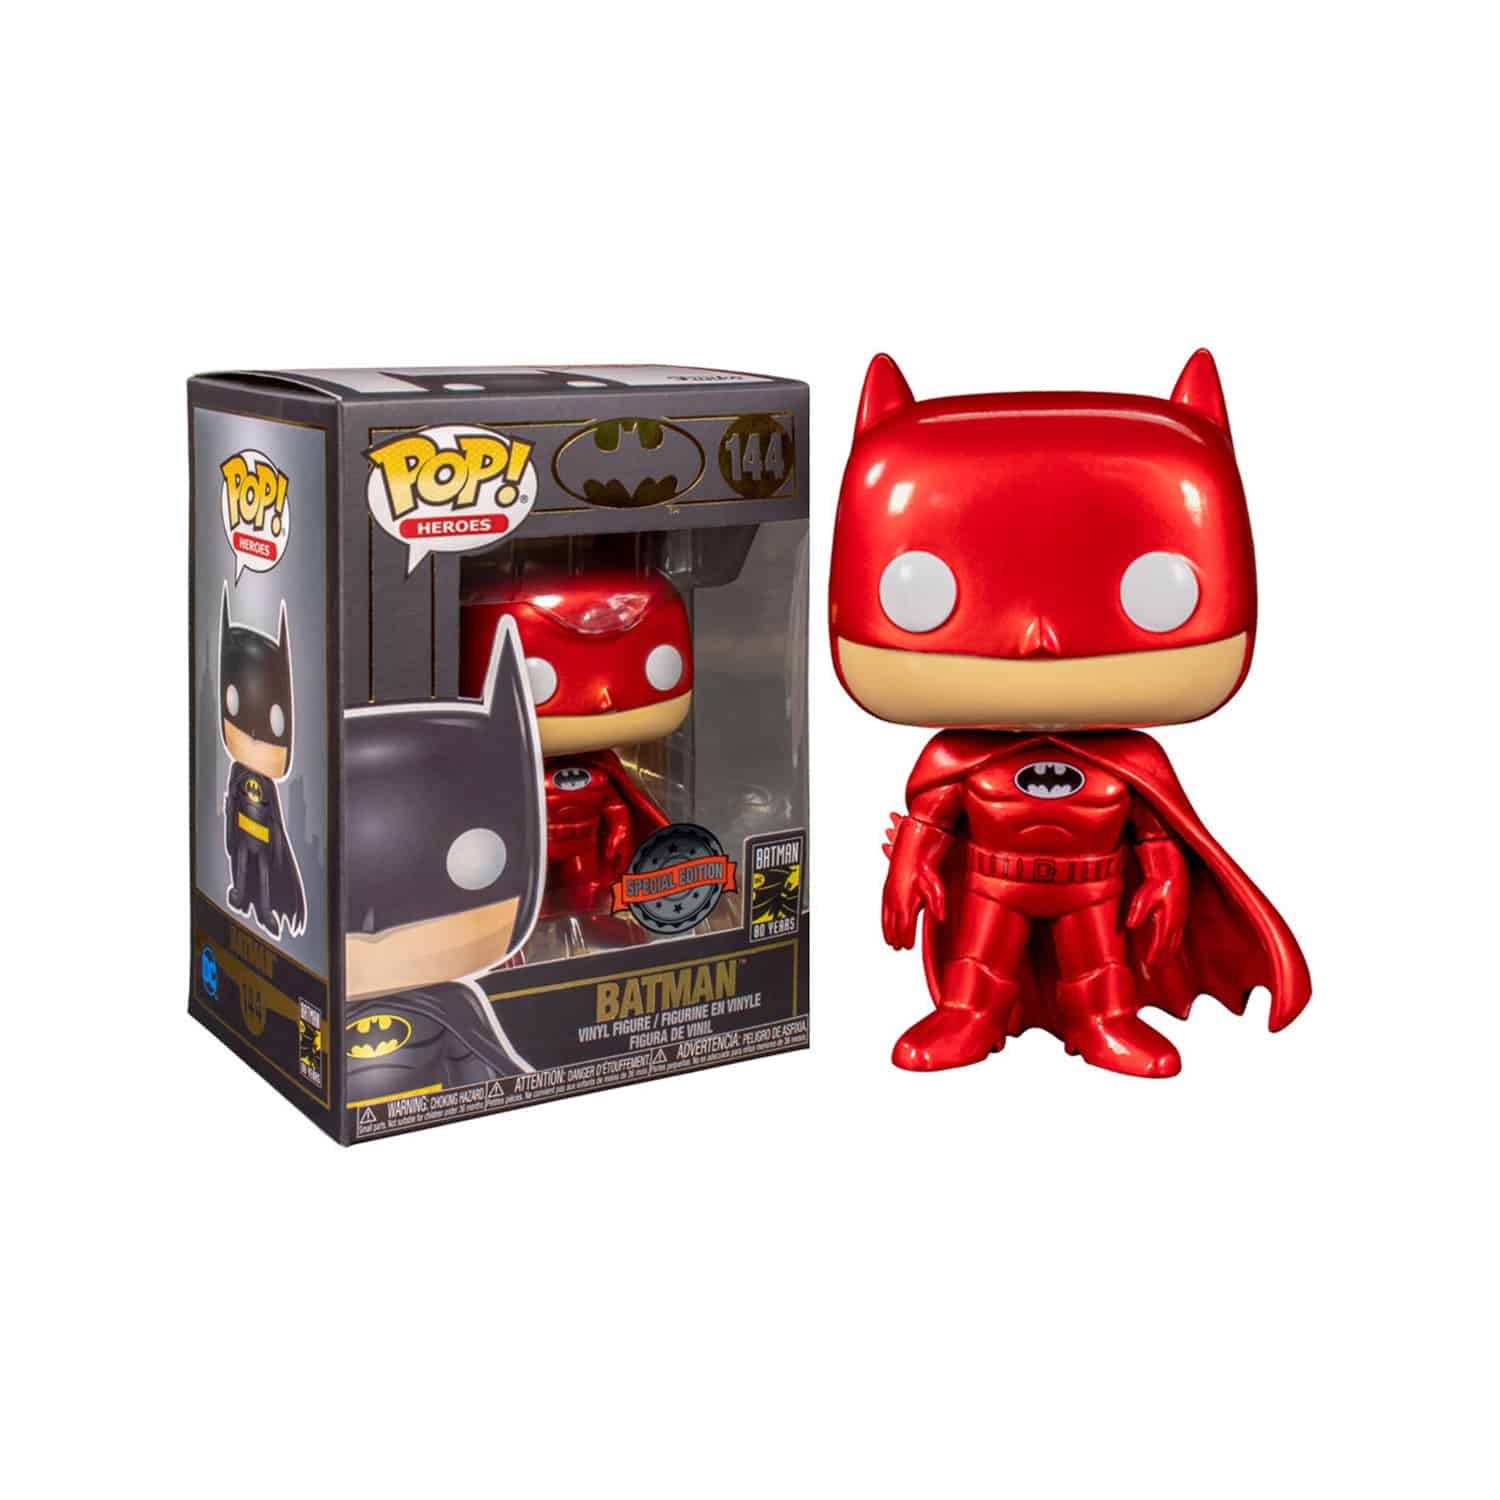 Batman - Red Metallic Batman Funko Pop! (Exclusive)